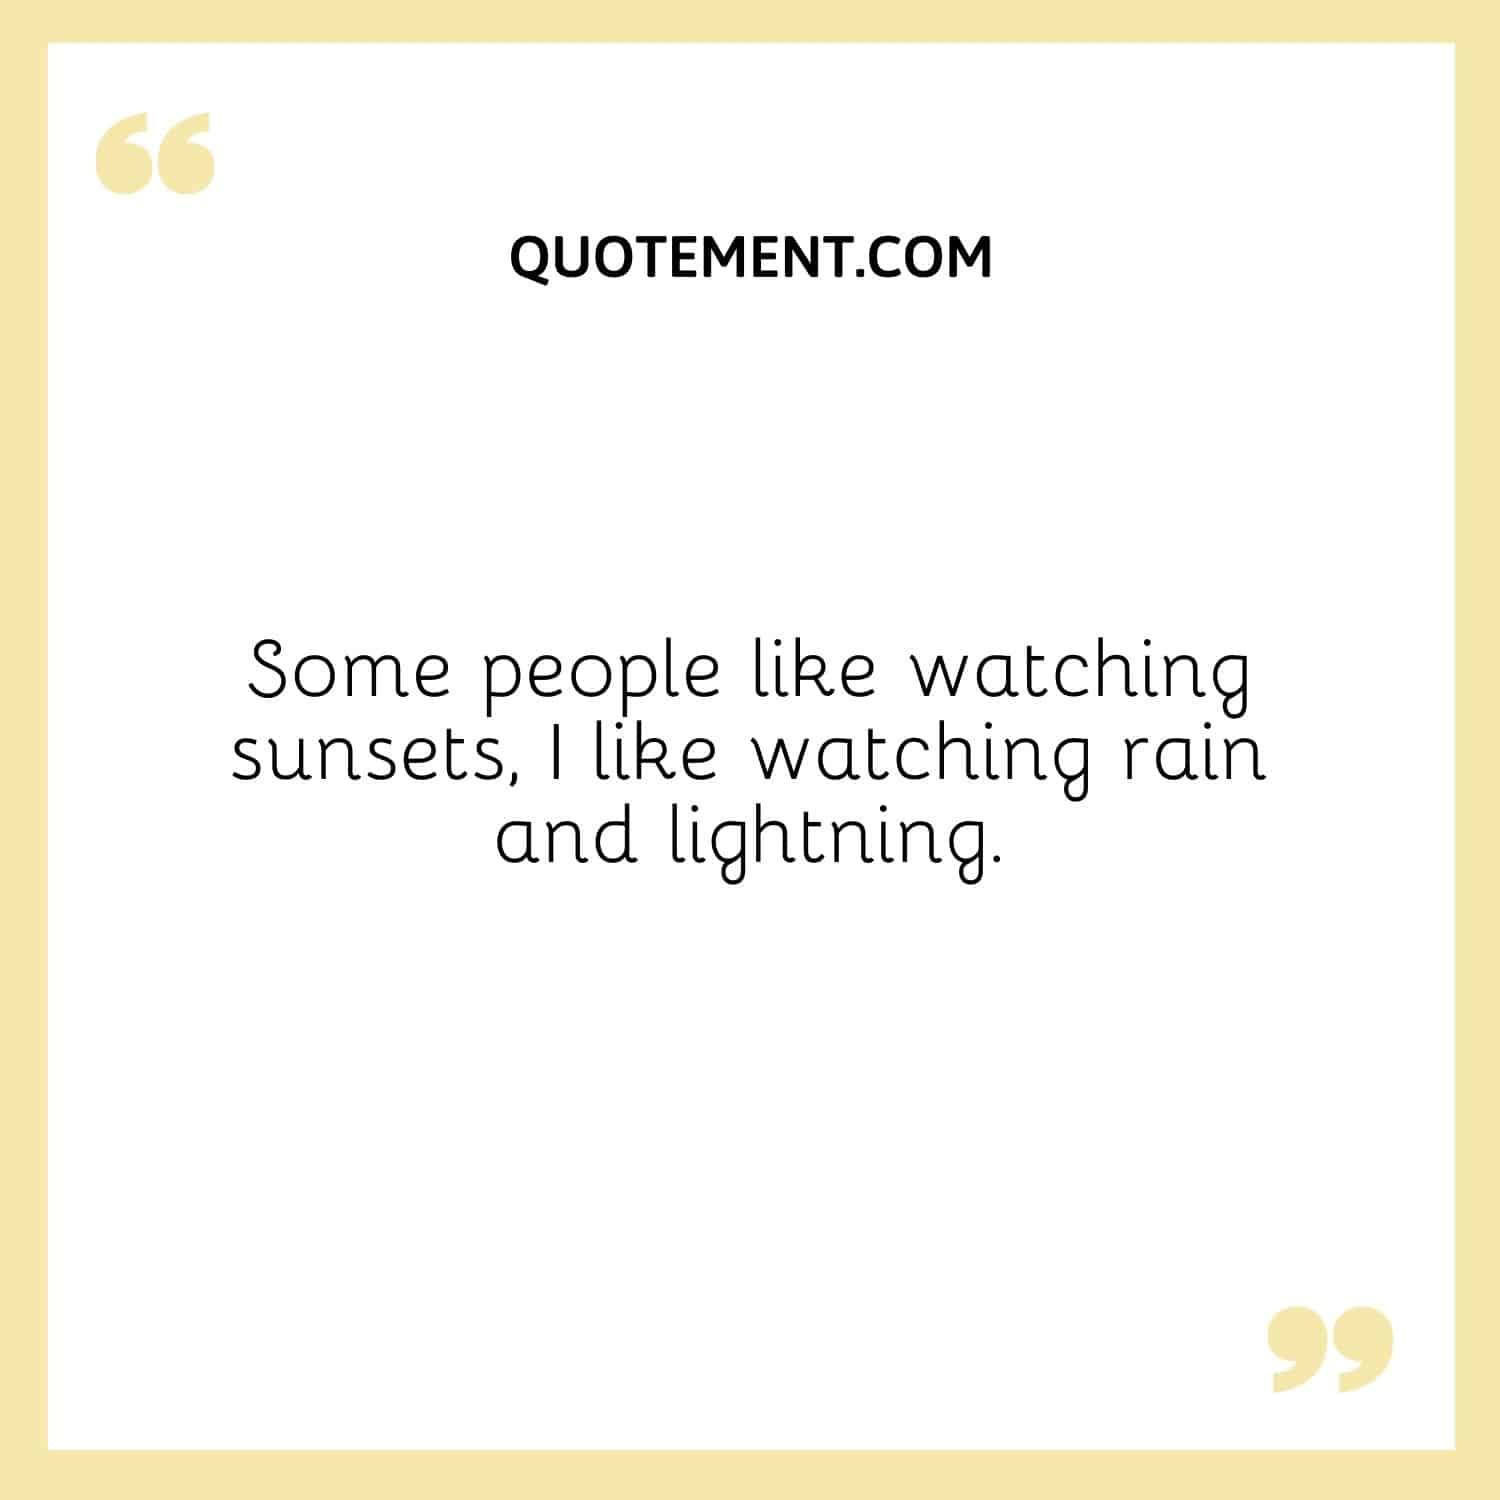 Some people like watching sunsets, I like watching rain and lightning.